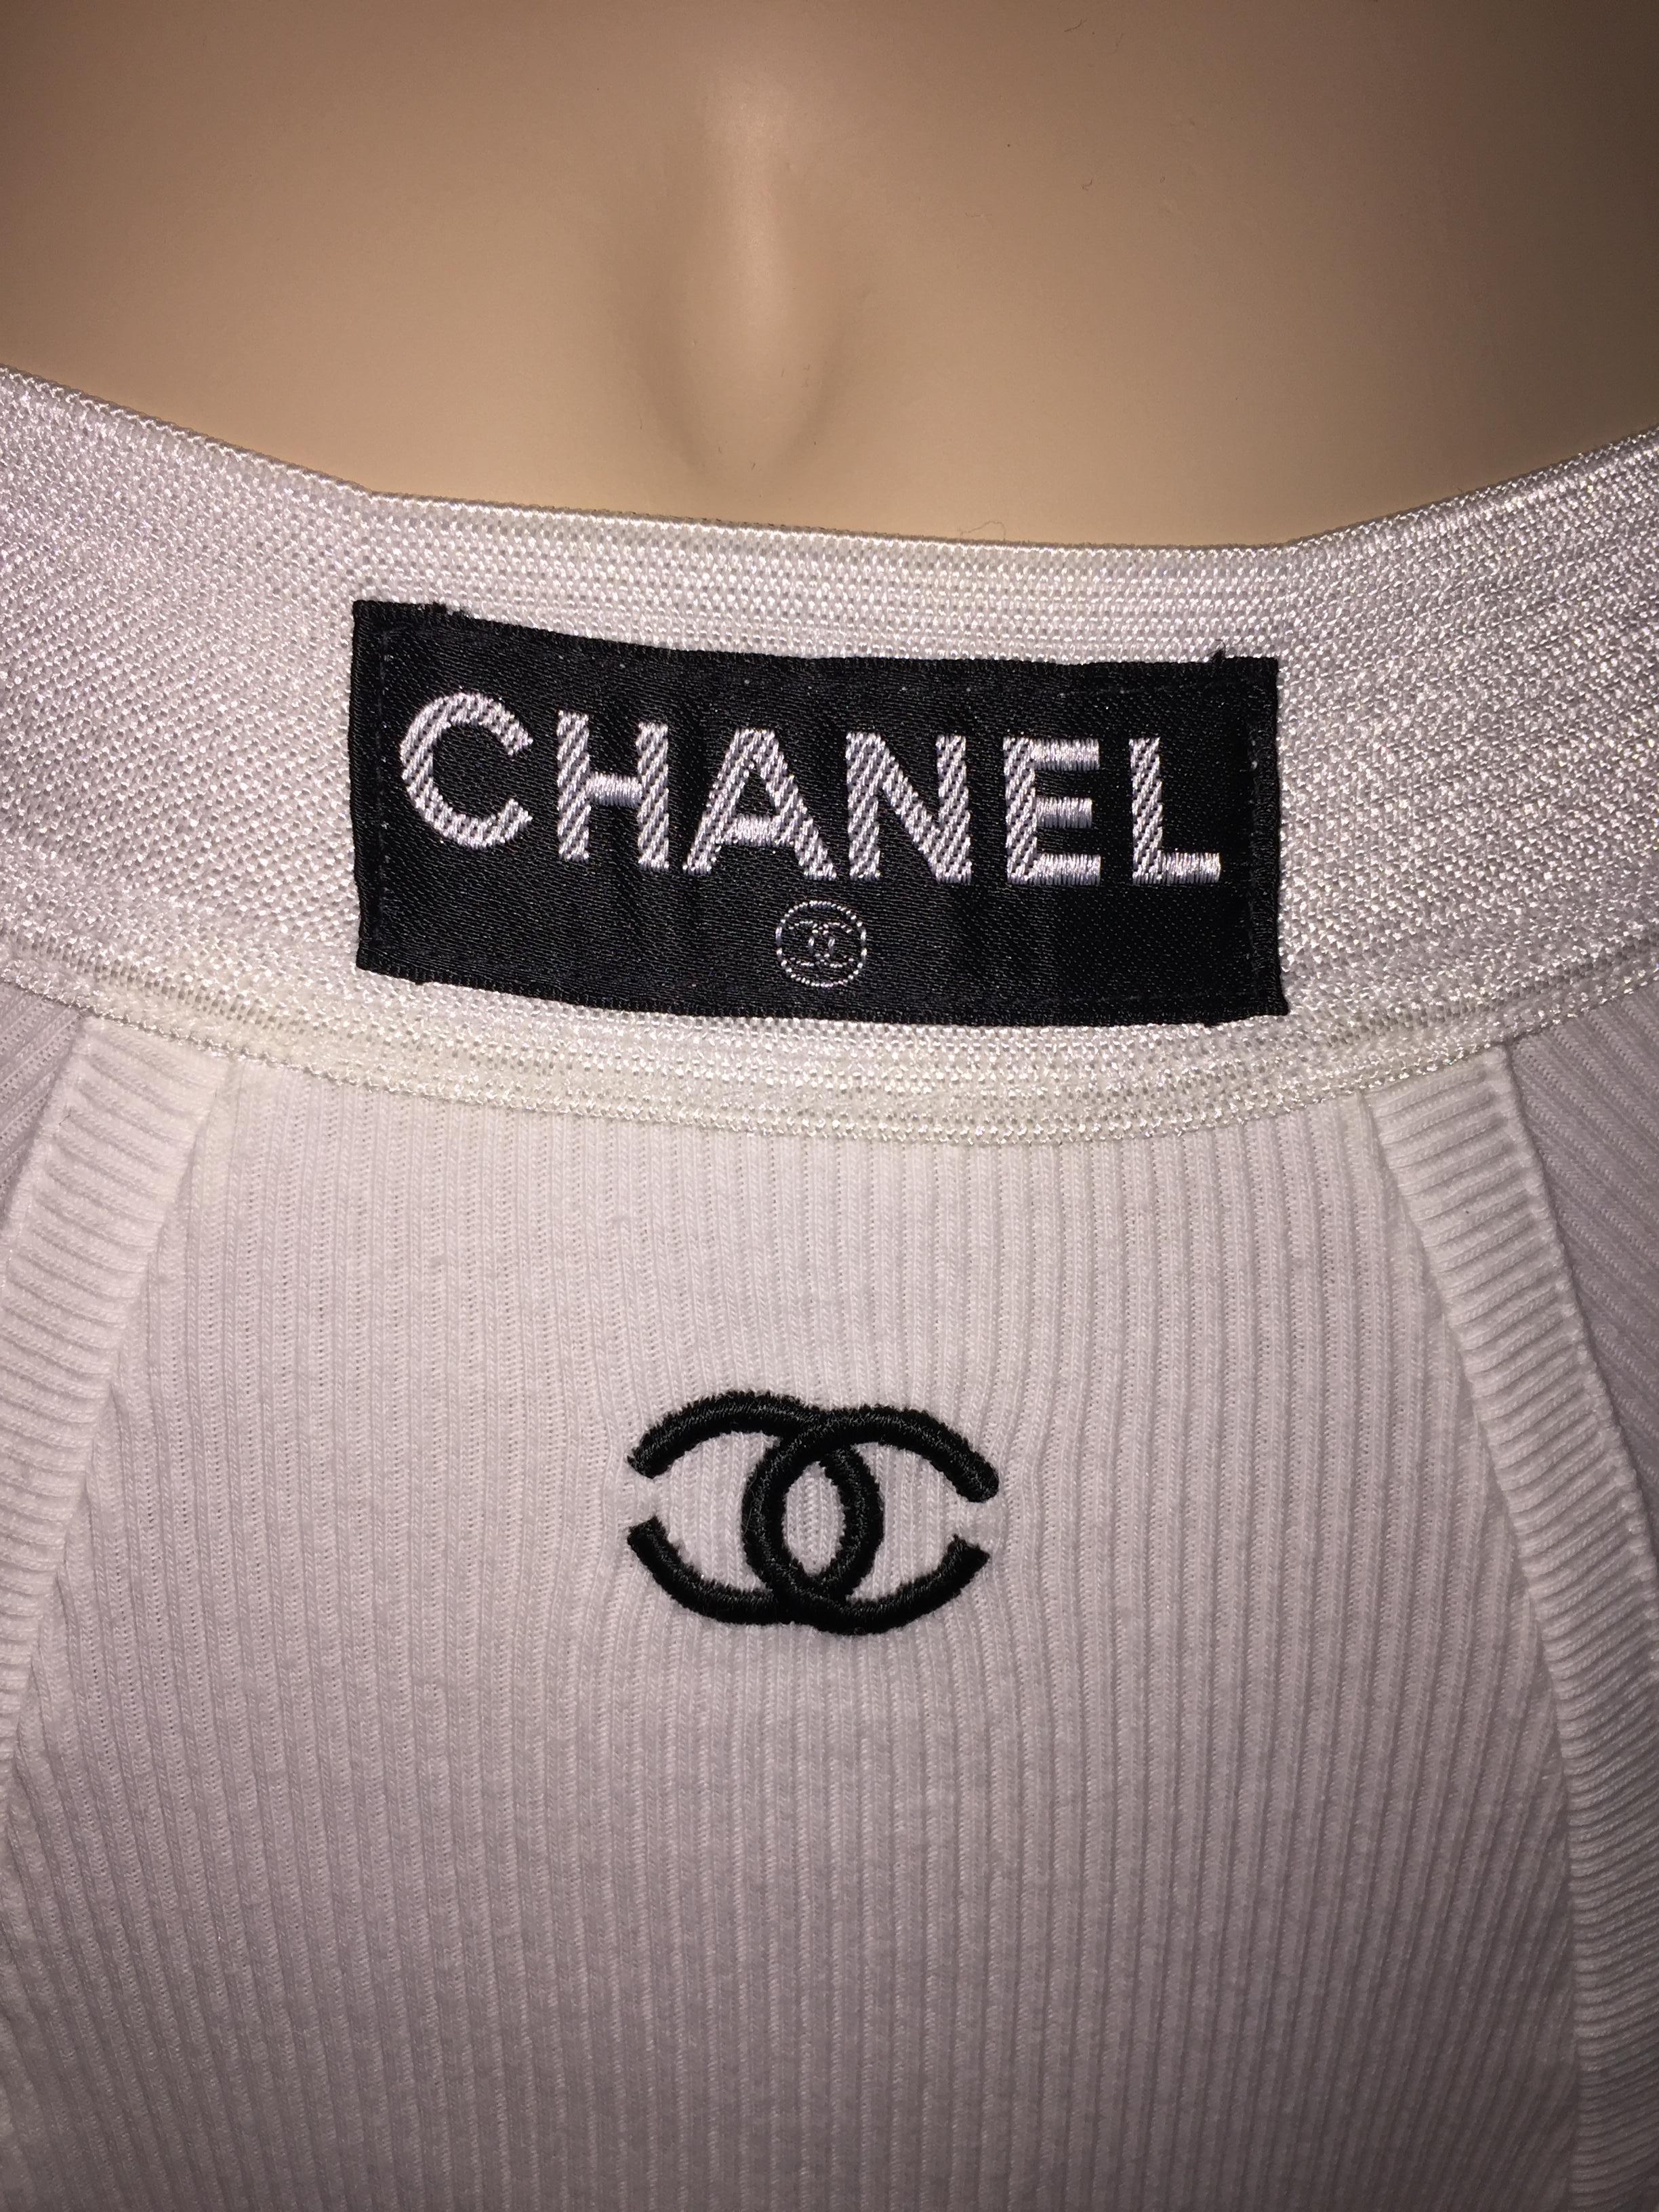 Unworn S/S 1993 Documented Chanel White High Waist Panties & Black Mesh Top In Good Condition In Yukon, OK